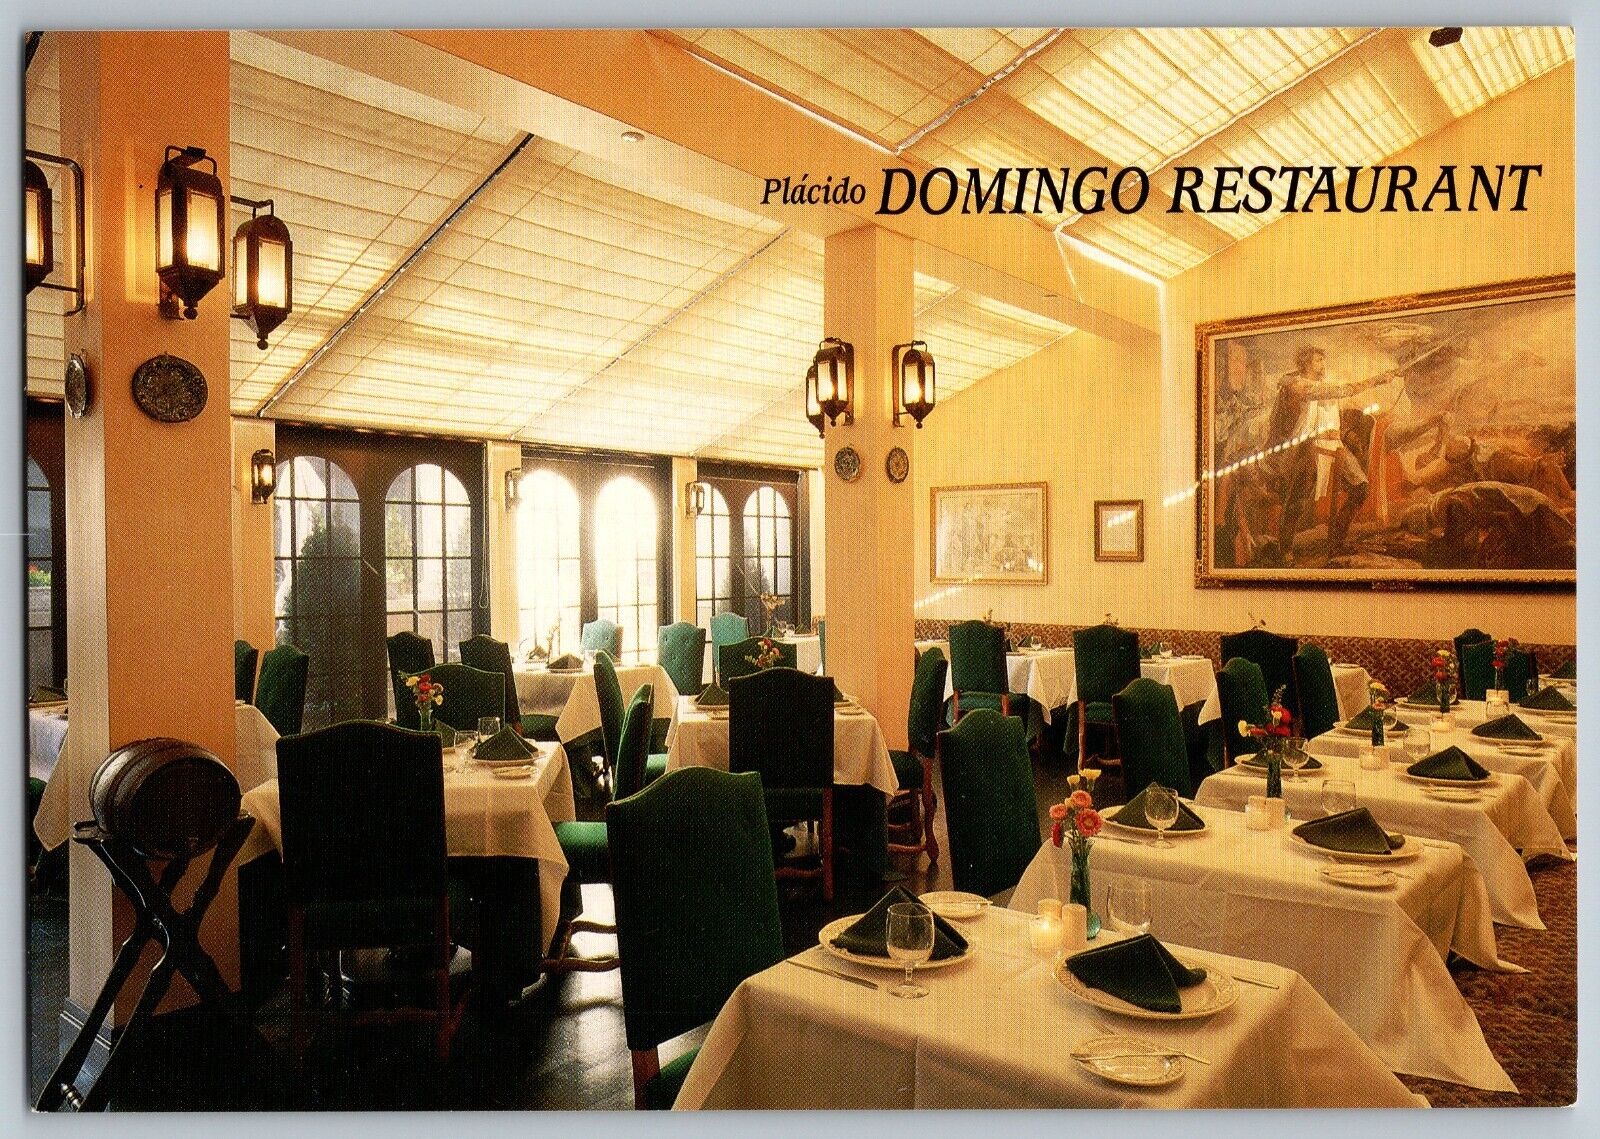 New York City, New York - Placido Domingo Restaurant - Vintage Postcard 4x6